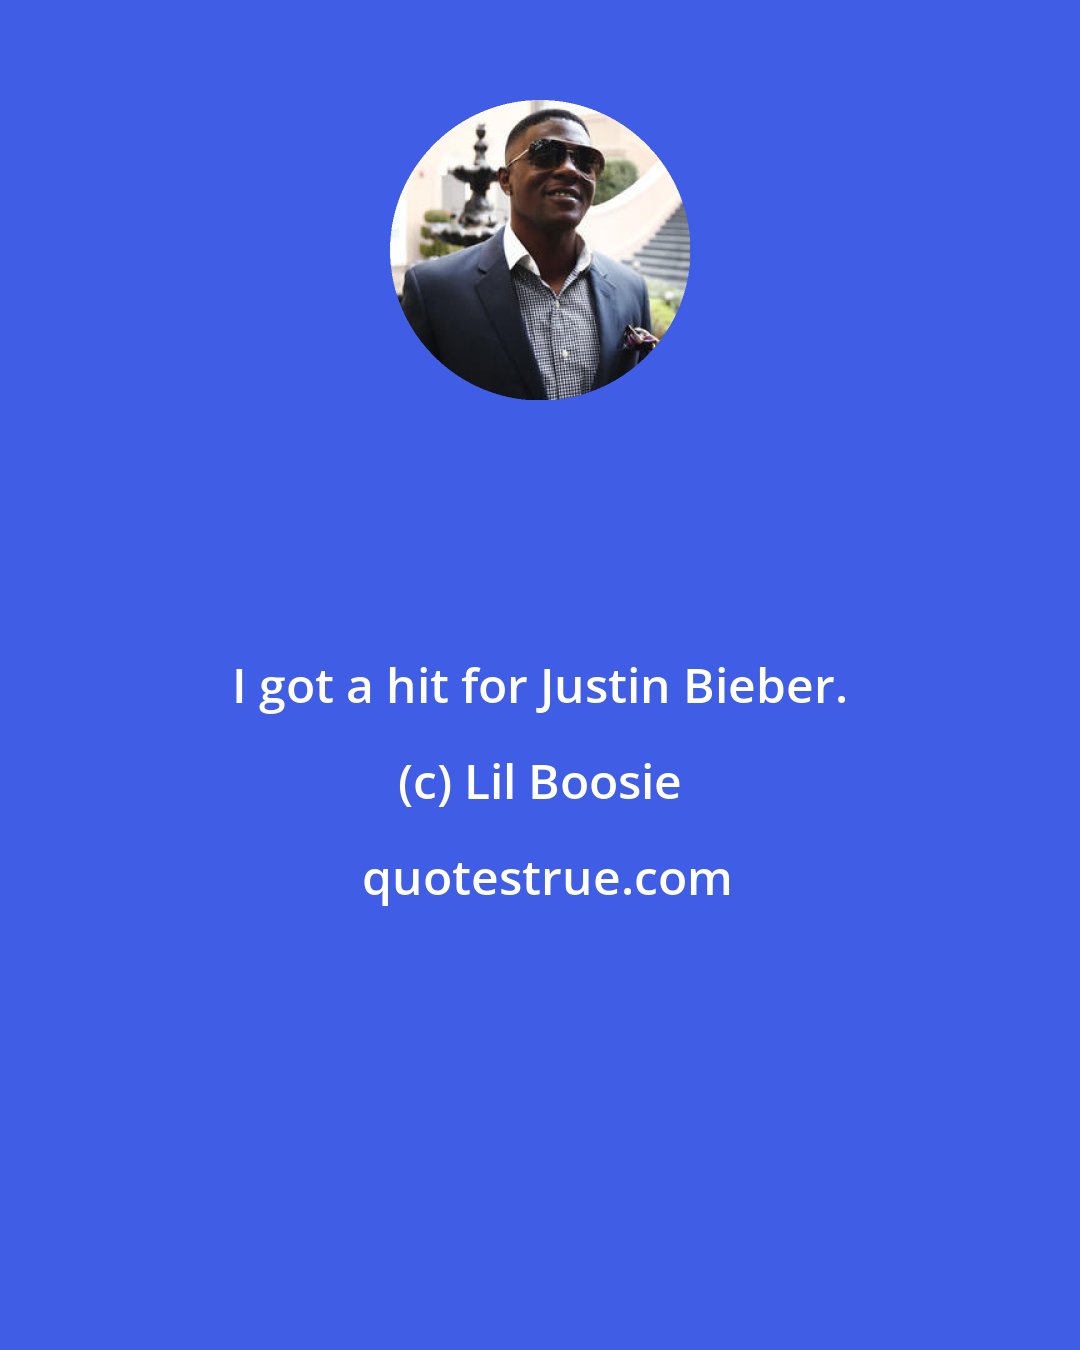 Lil Boosie: I got a hit for Justin Bieber.